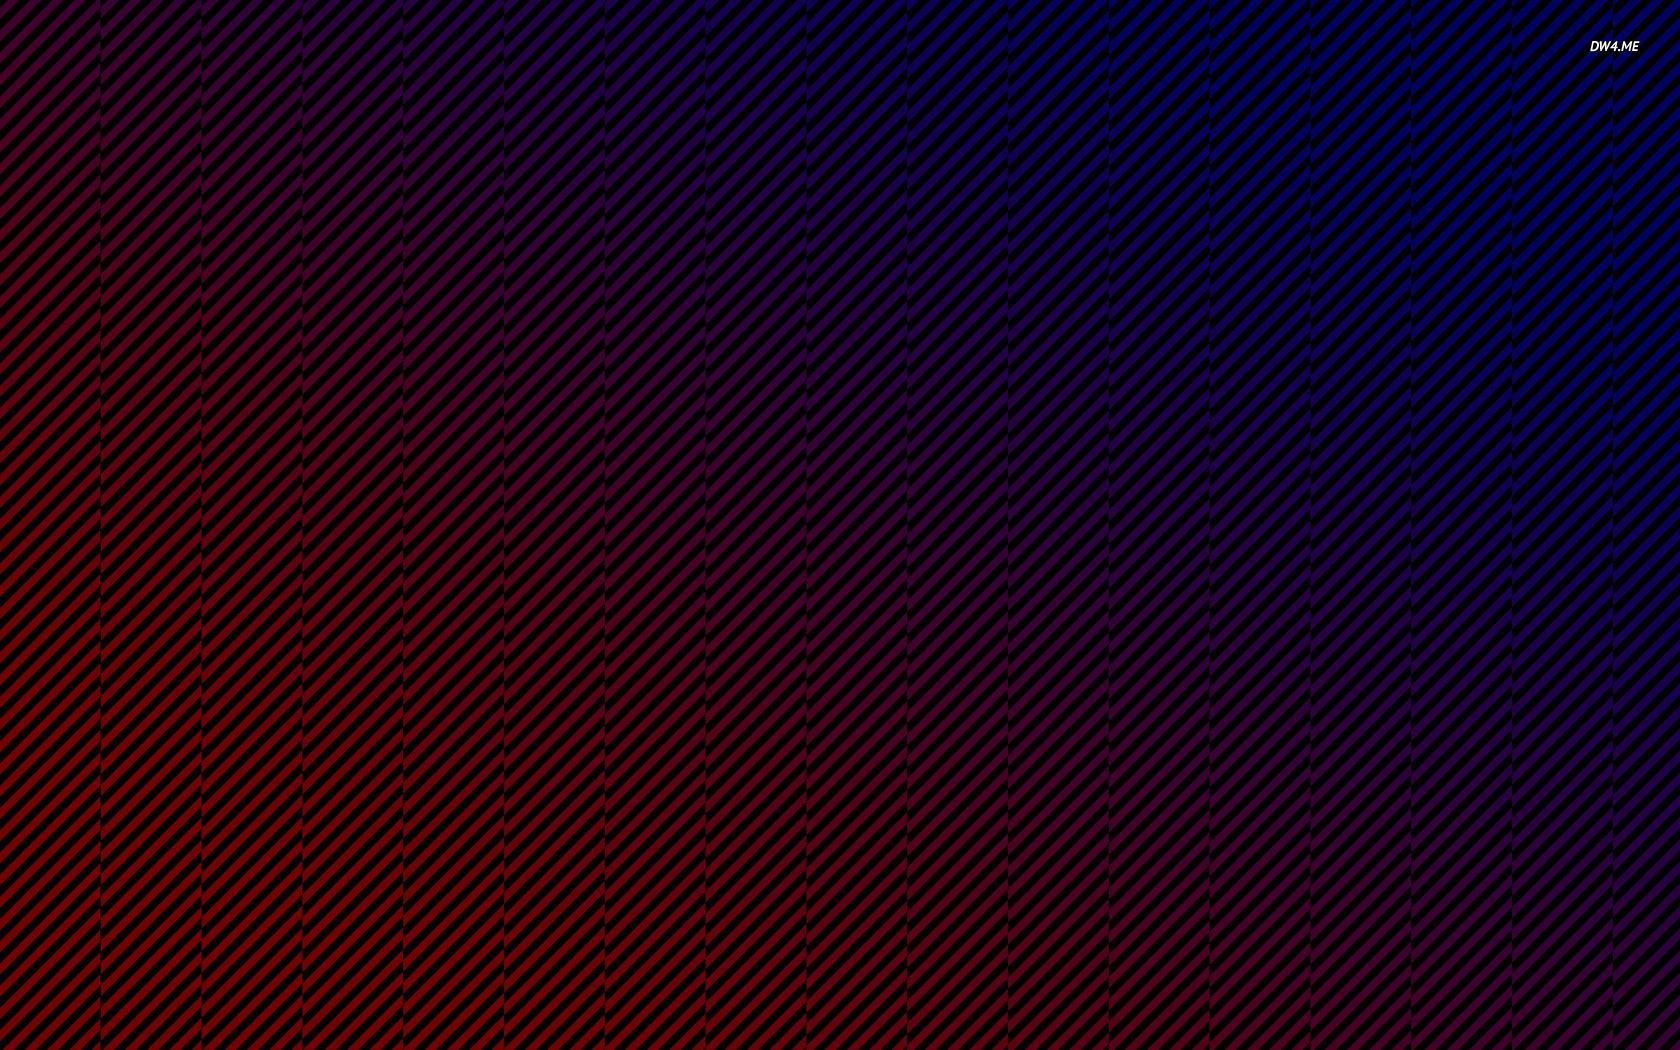 Red and blue diagonal stripes wallpaper - Digital Art wallpapers ...